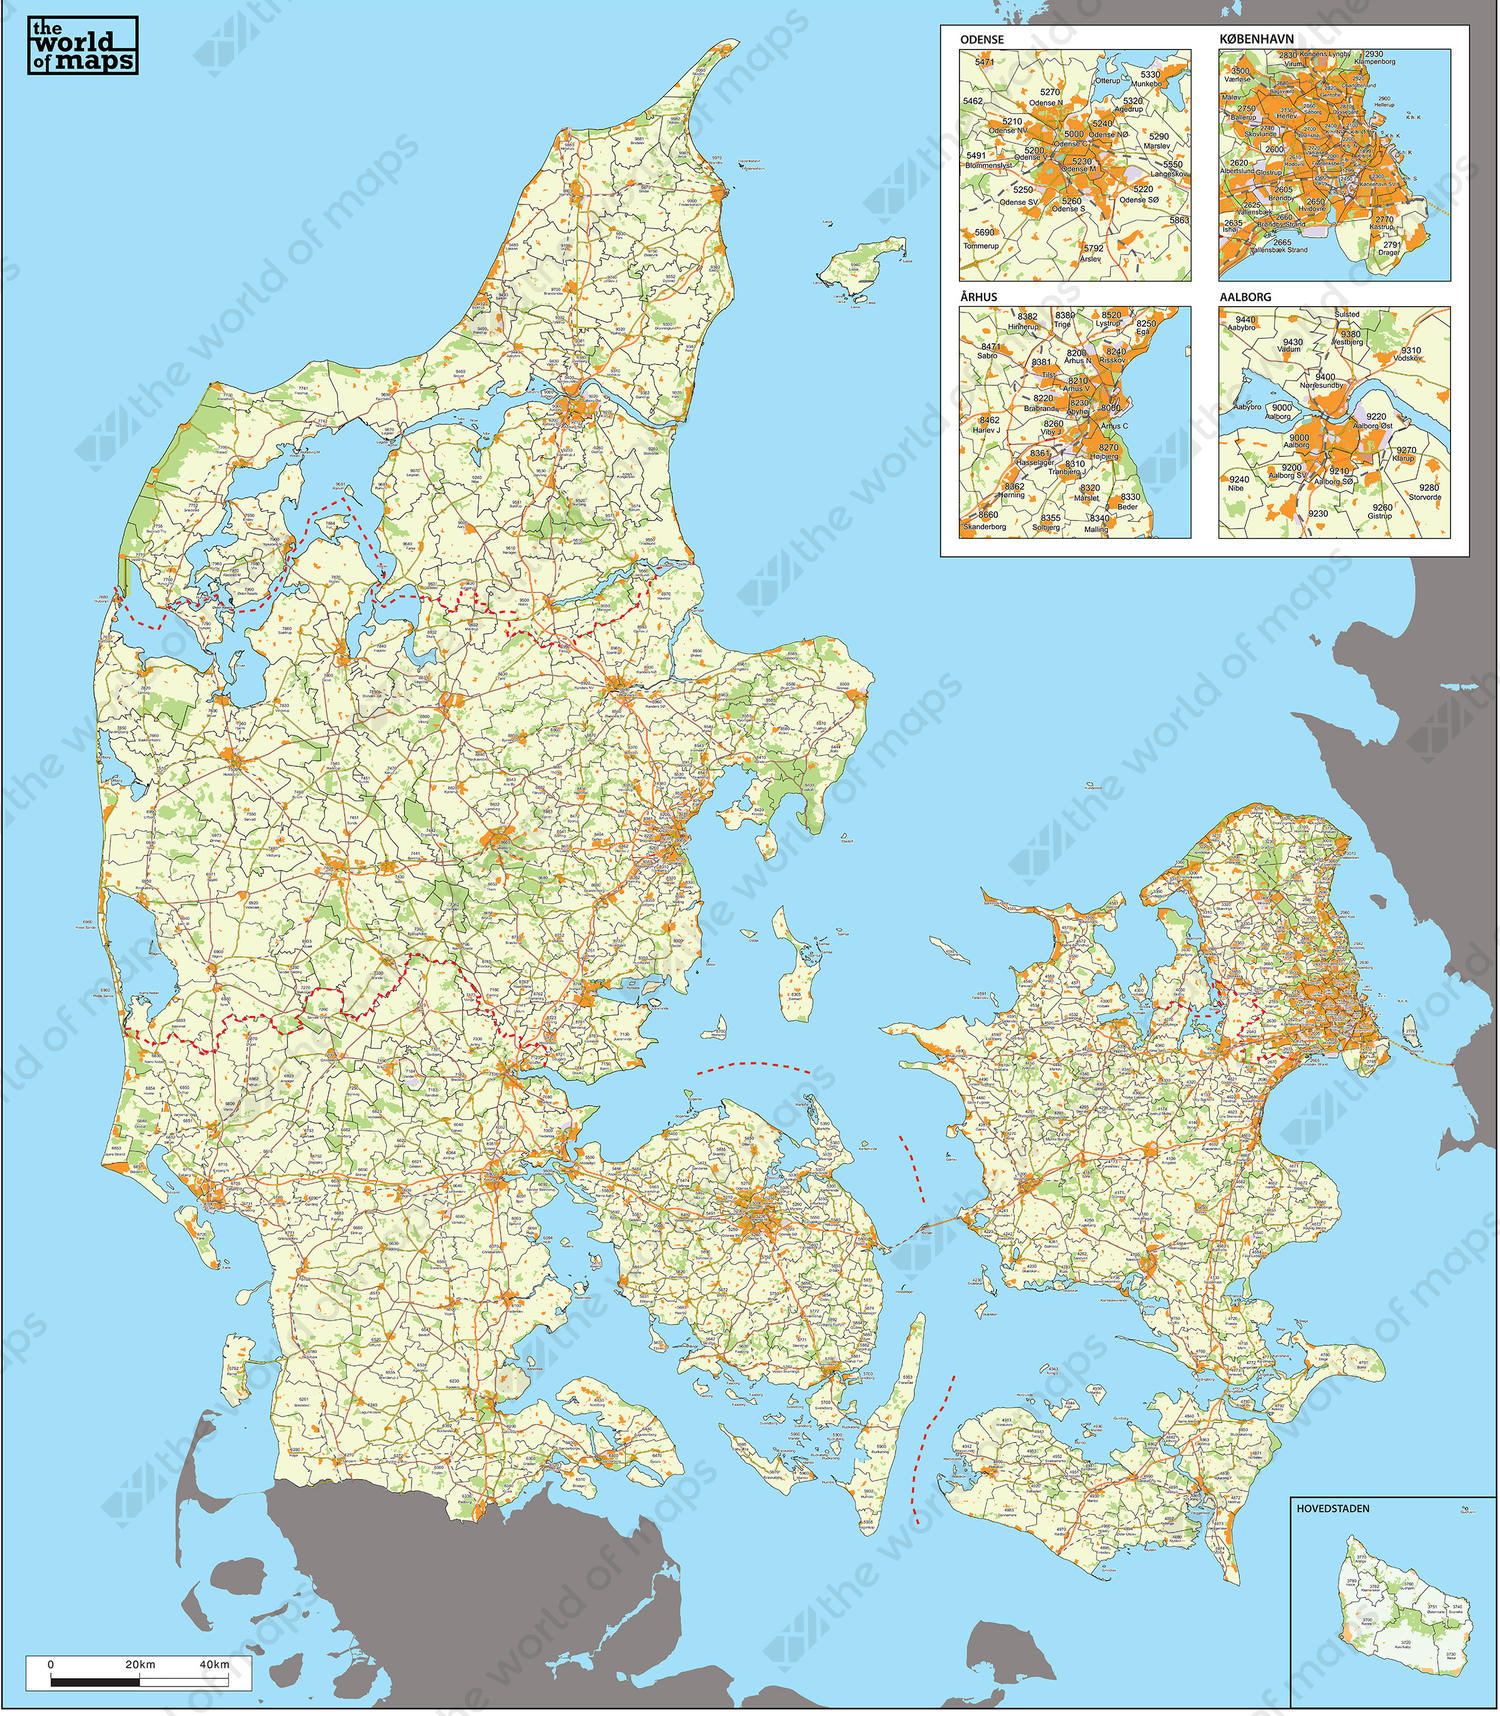 Digital ZIP Code Map Denmark 17 | The World of Maps.com